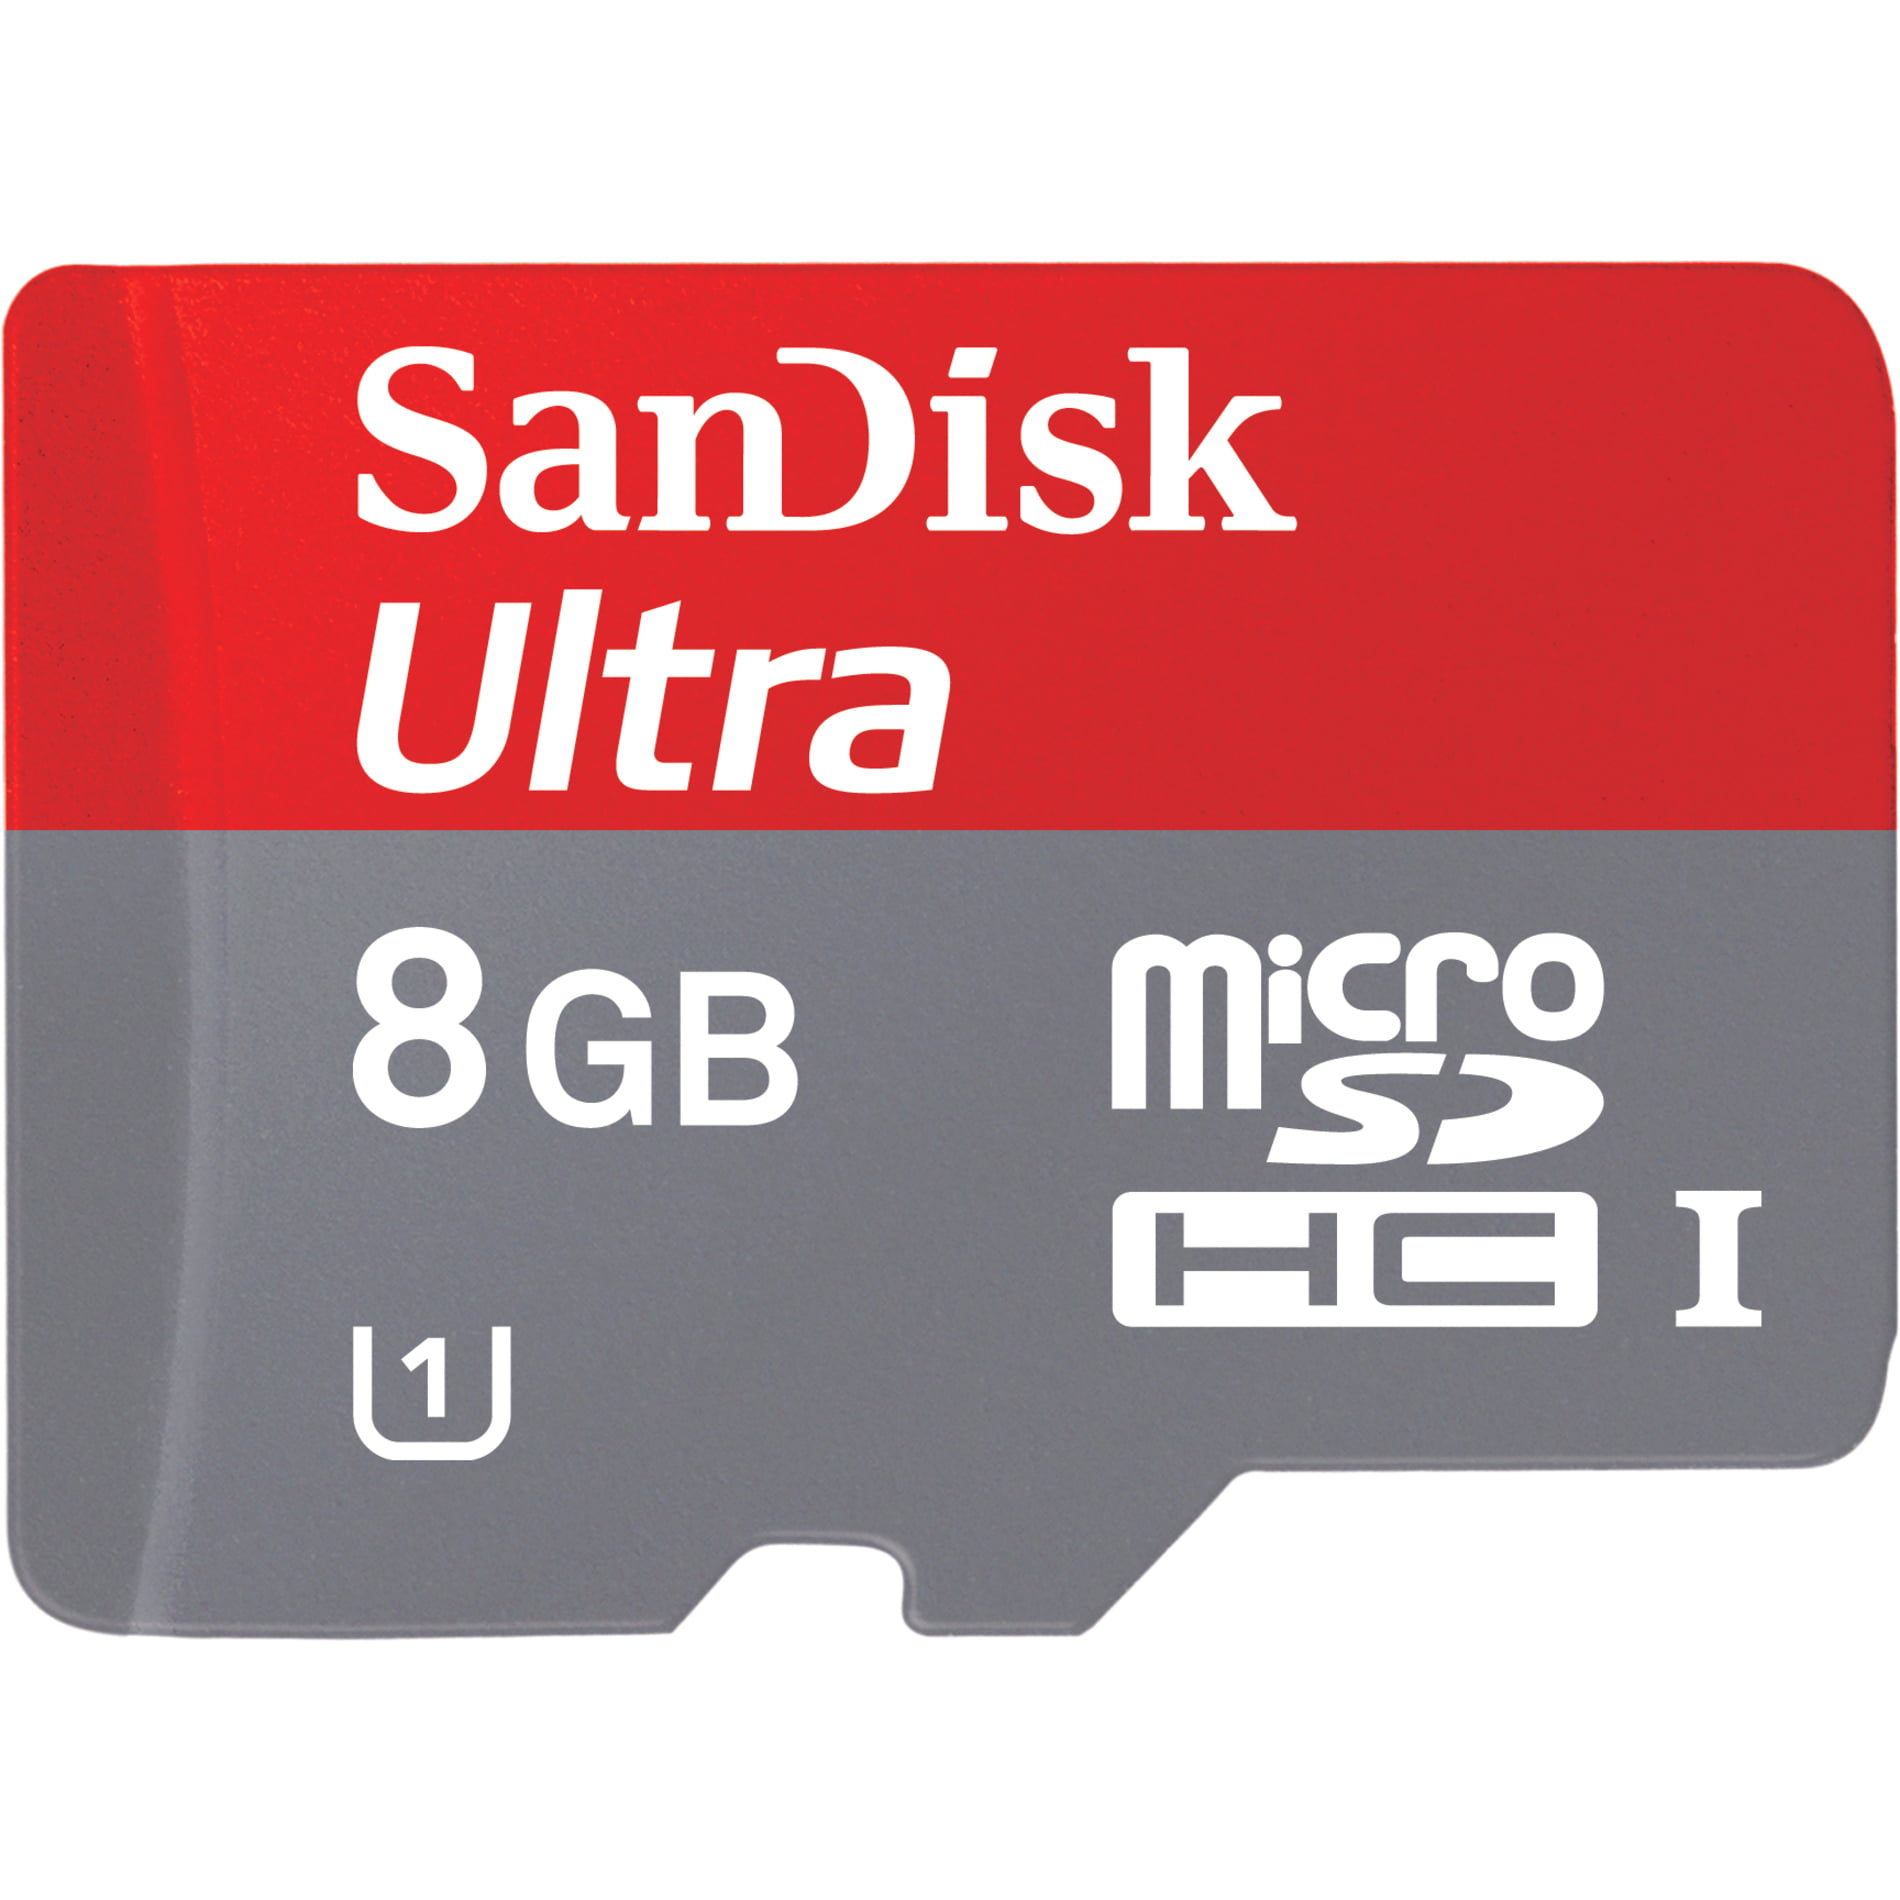 coal defect Bone marrow SanDisk Ultra 8 GB Class 10/UHS-I microSDHC, 1 Pack - Walmart.com